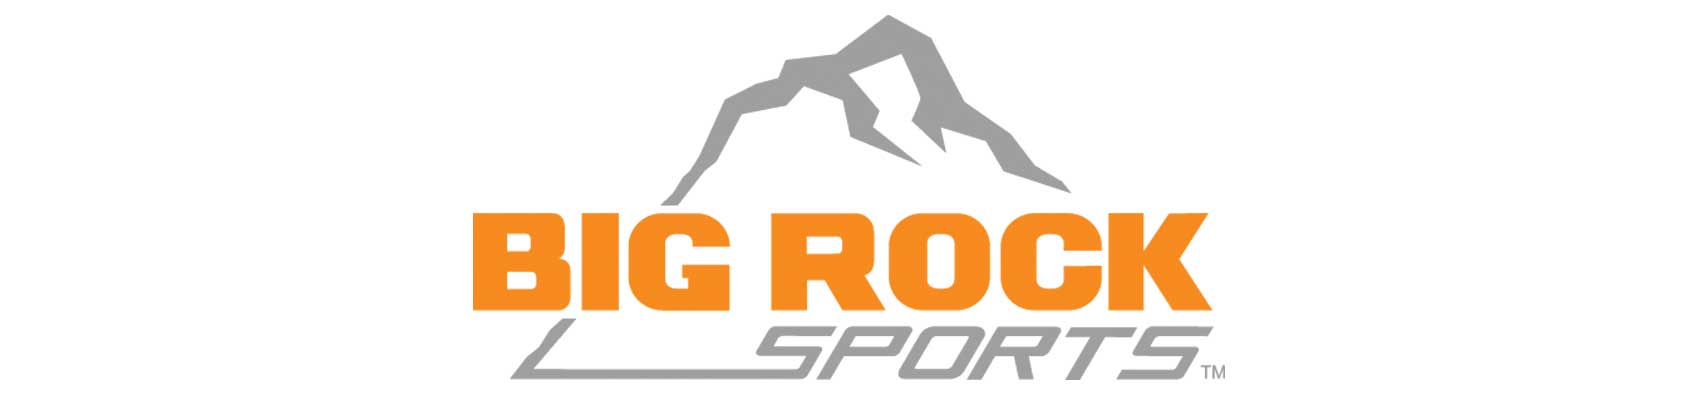 Big Rock Sports Backs Sportsmen’s Alliance with Partnership - Sportsmen